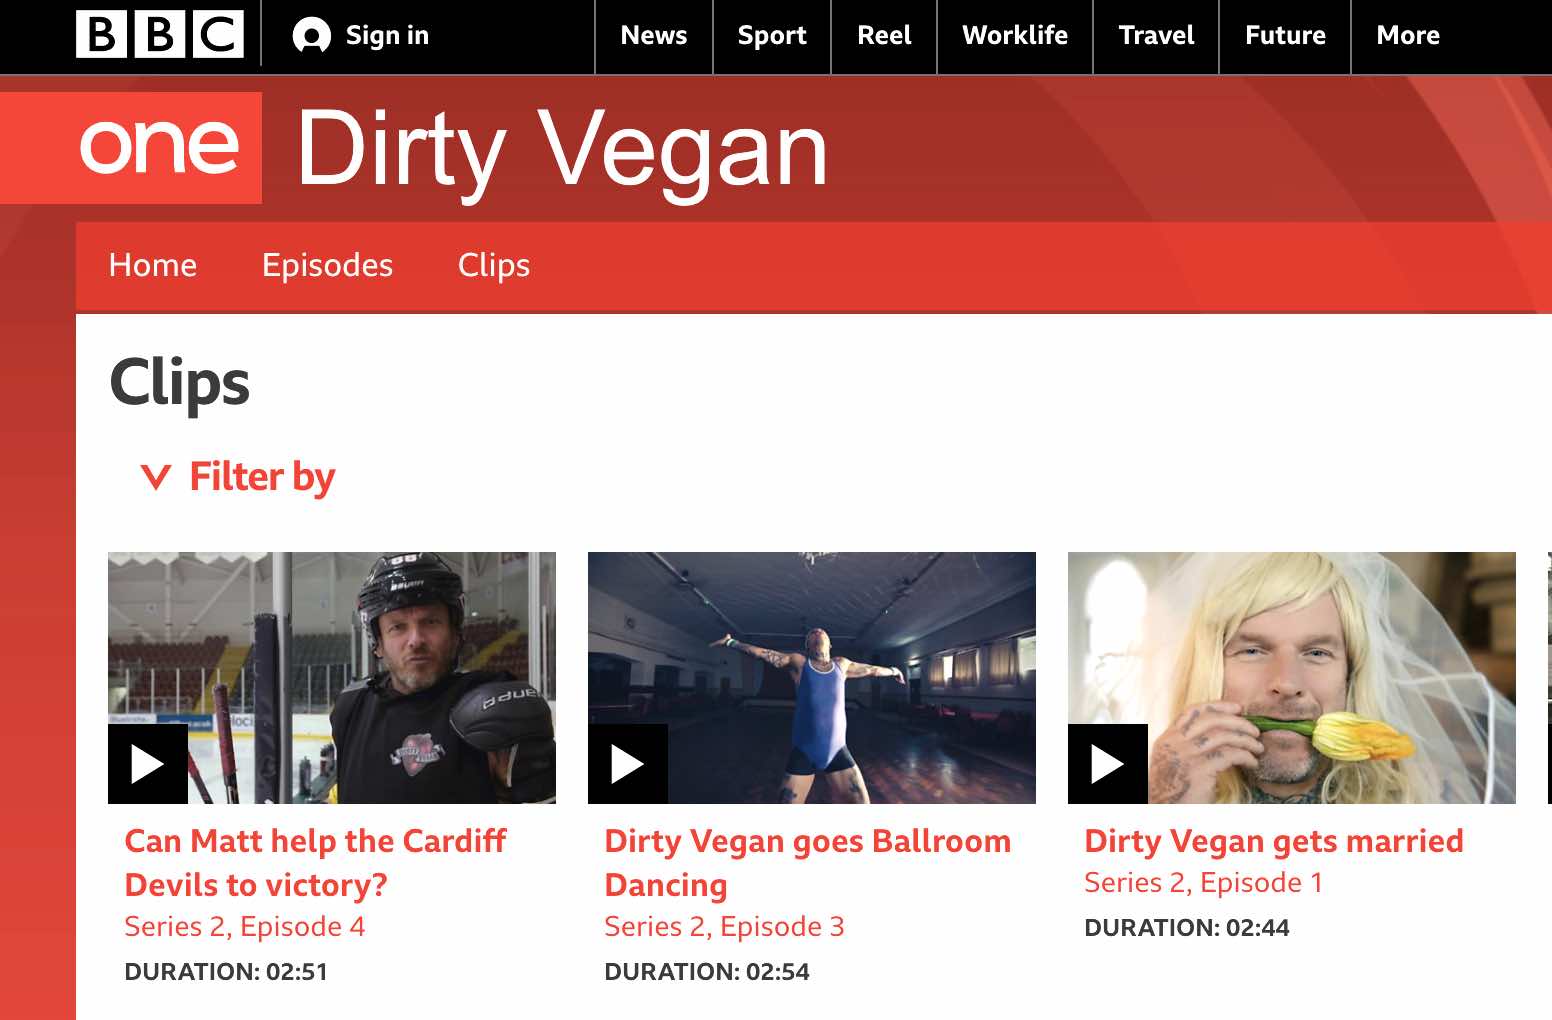 The Dirty Vegan is a hit show on the BBC starring Matt Prichard.